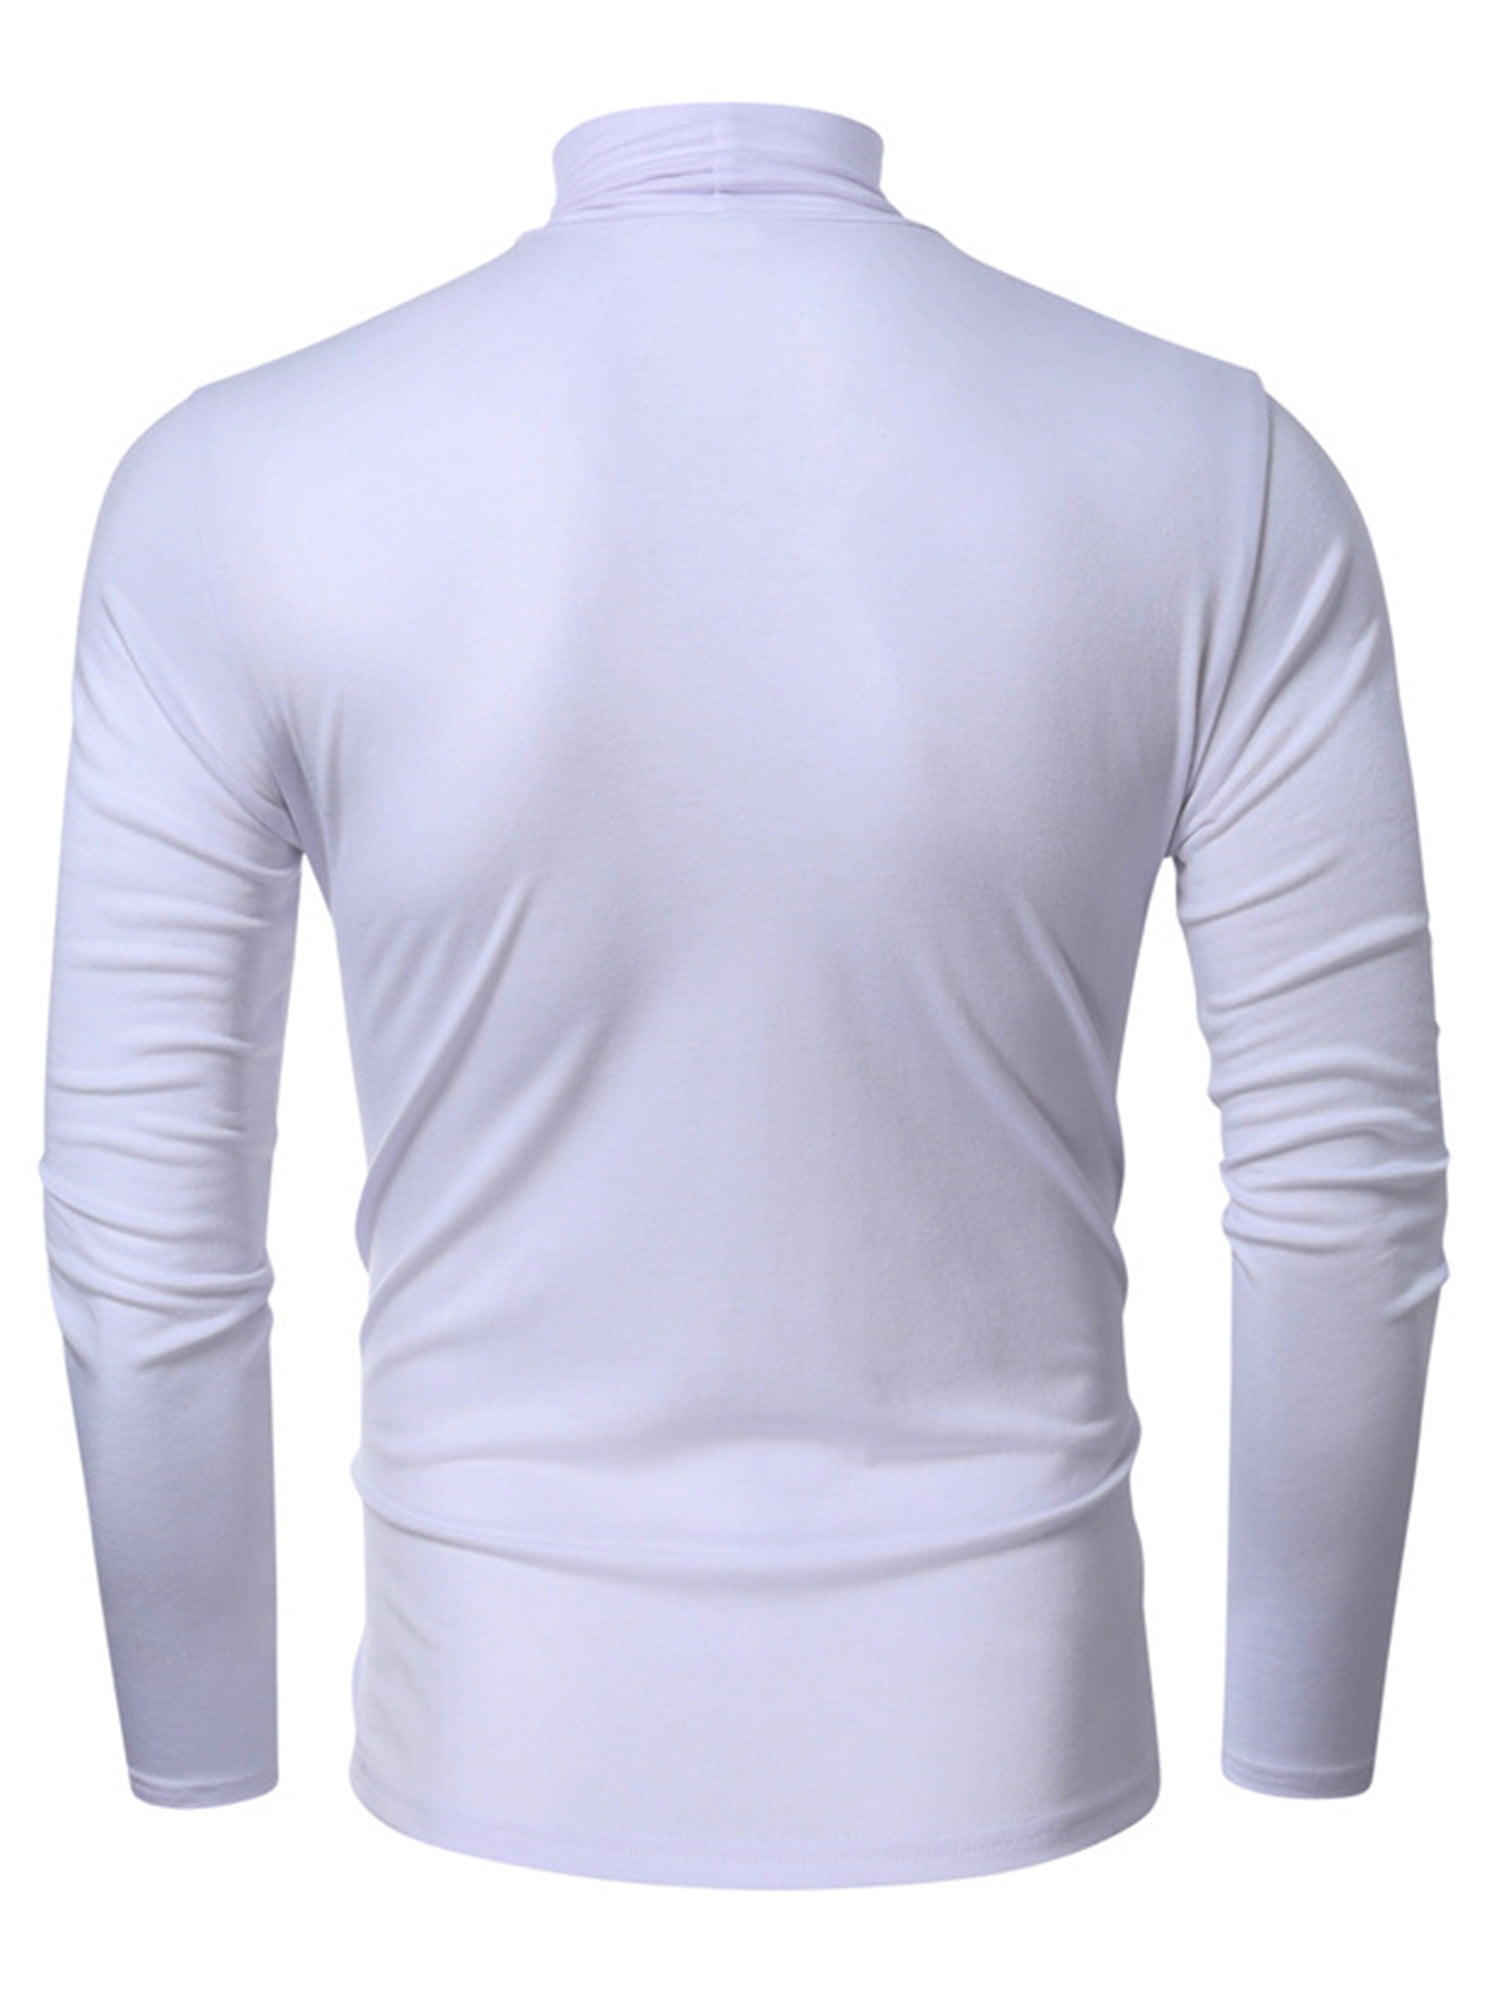 Herren Sweatshirt Hoodie Longsleeve Langarm Shirt Vintage T-Shirt M L XL Polo